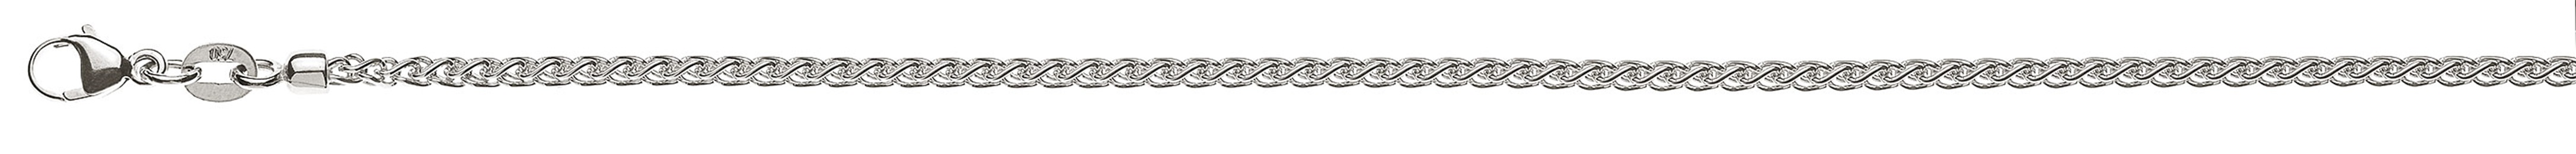 AURONOS Prestige Collier chaîne en or blanc 18K 55cm 2.15mm